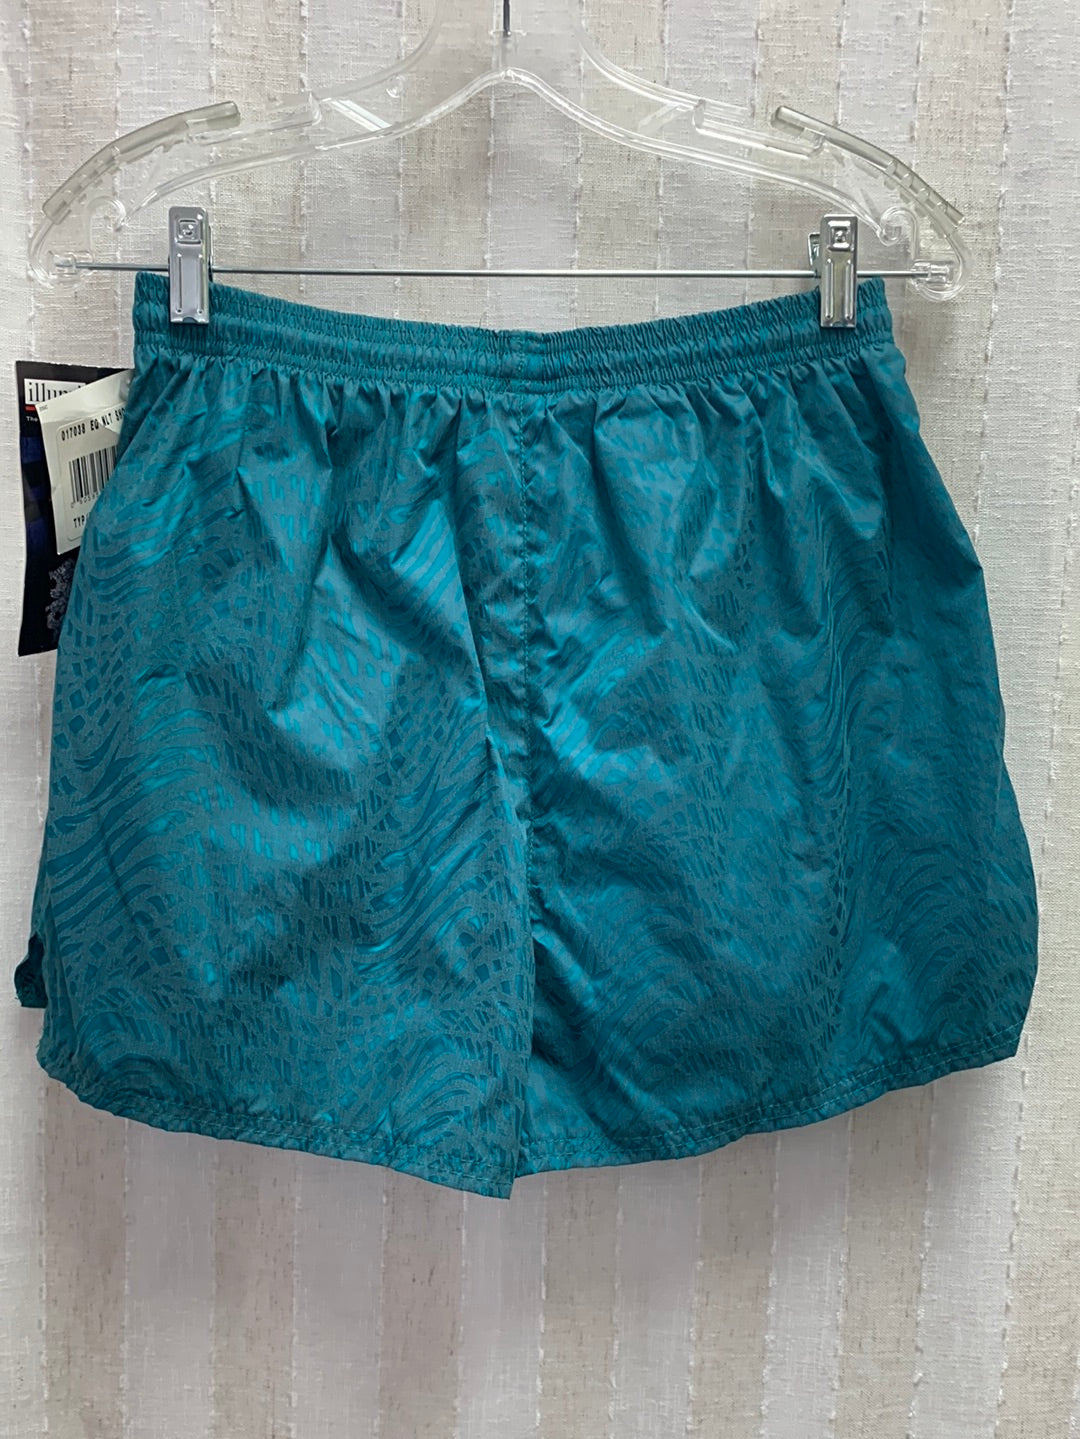 NWT Vintage - ADIDAS teal print Reflective Fabric Shorts - Medium